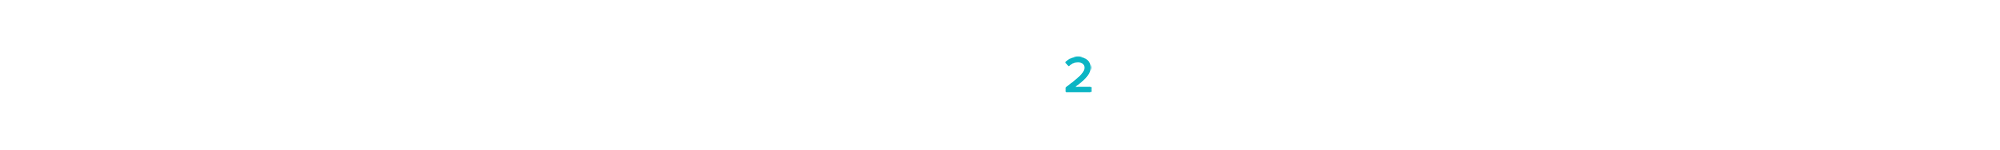 Opus 2 White lp email logo banner-2